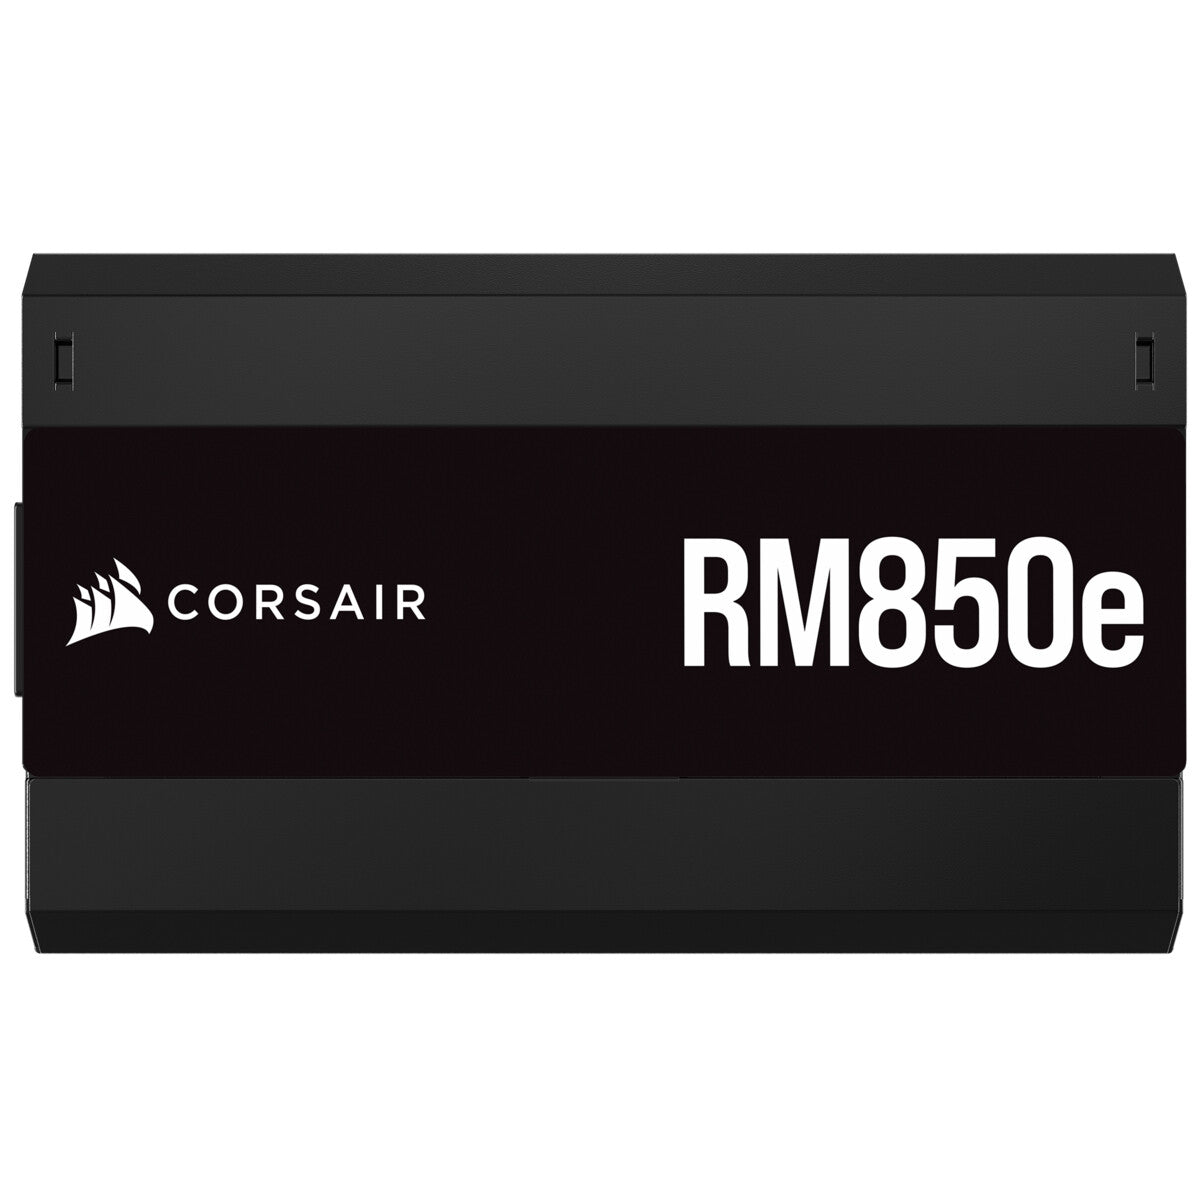 Corsair RM850e - 850W 80+ Gold Fully Modular Power Supply Unit